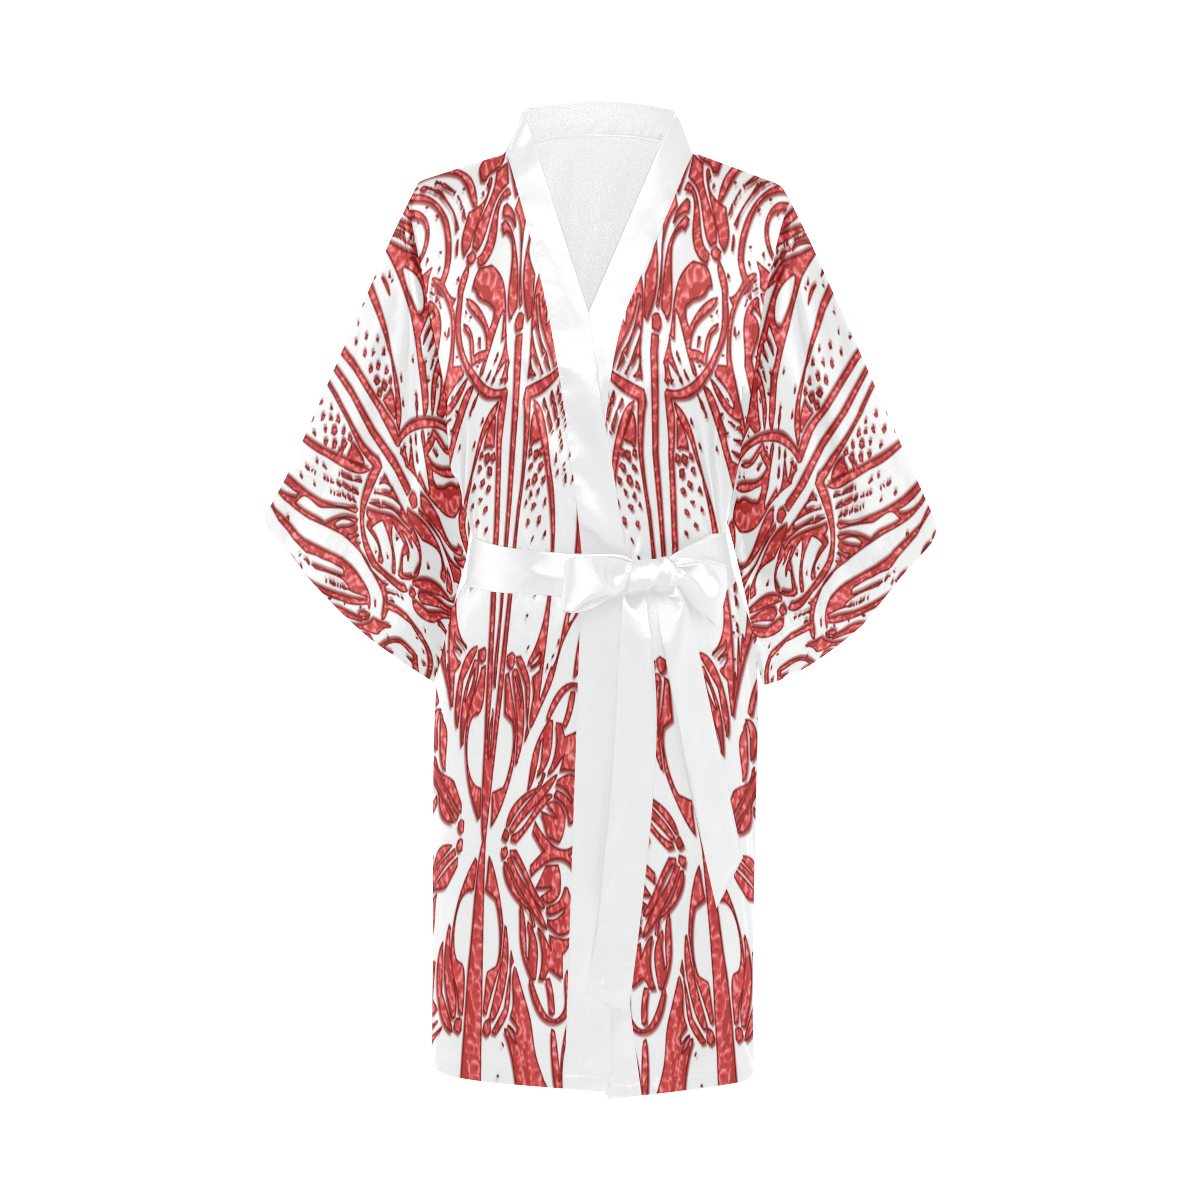 Lace Red Kimono Robe